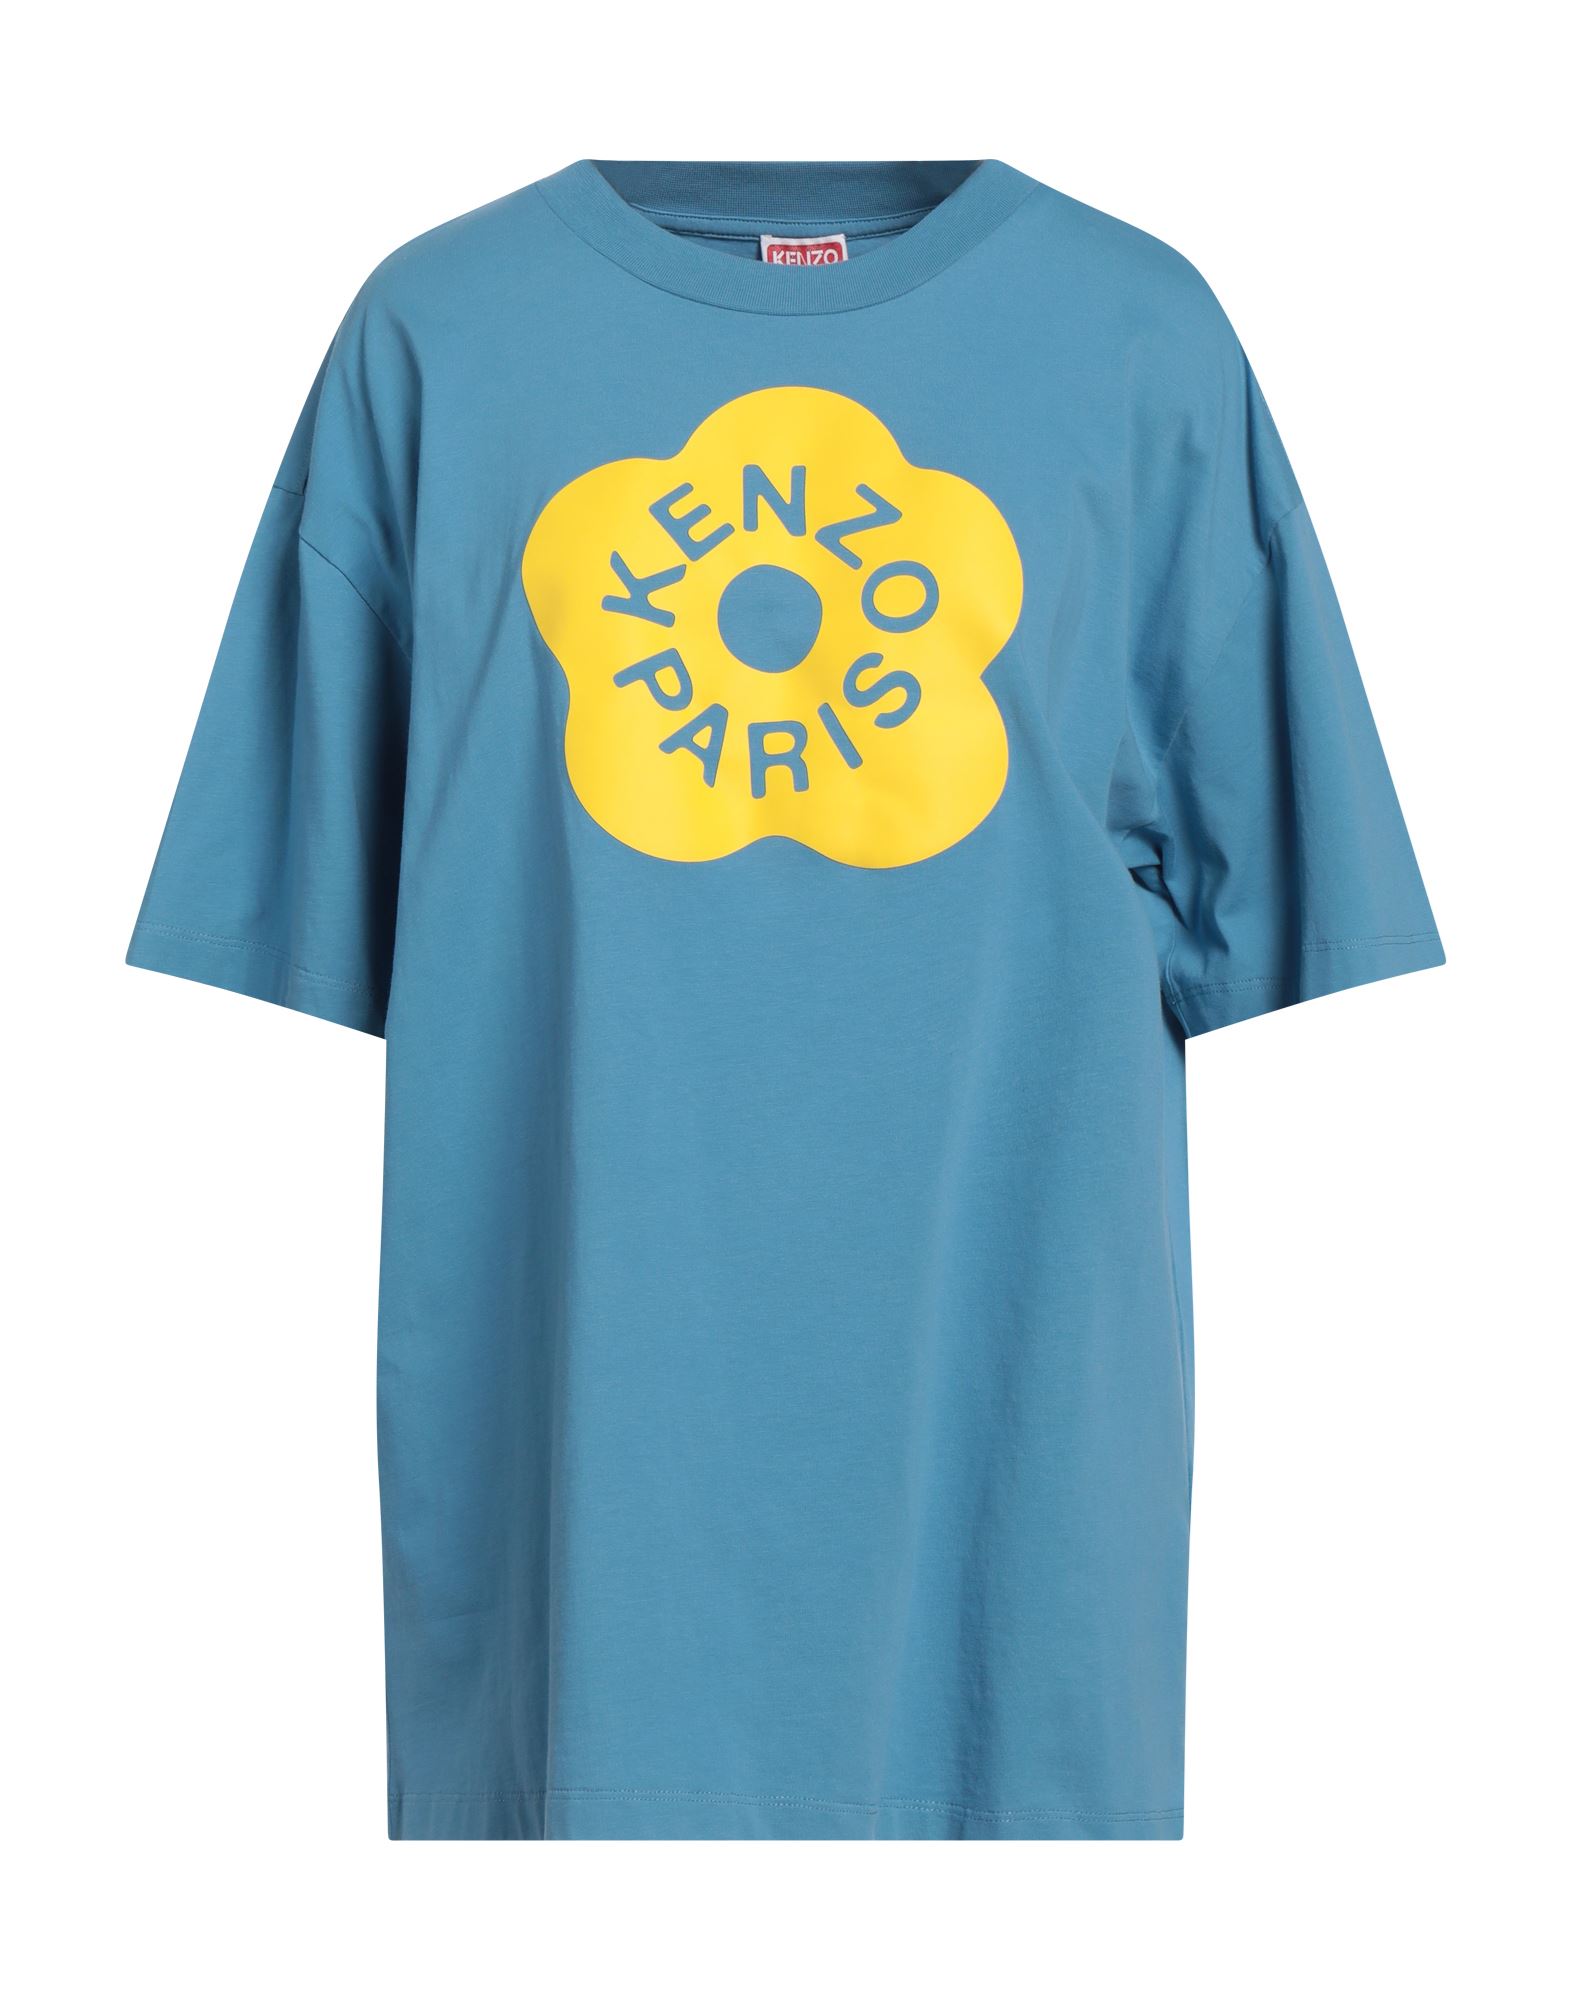 KENZO T-shirts Damen Blaugrau von KENZO